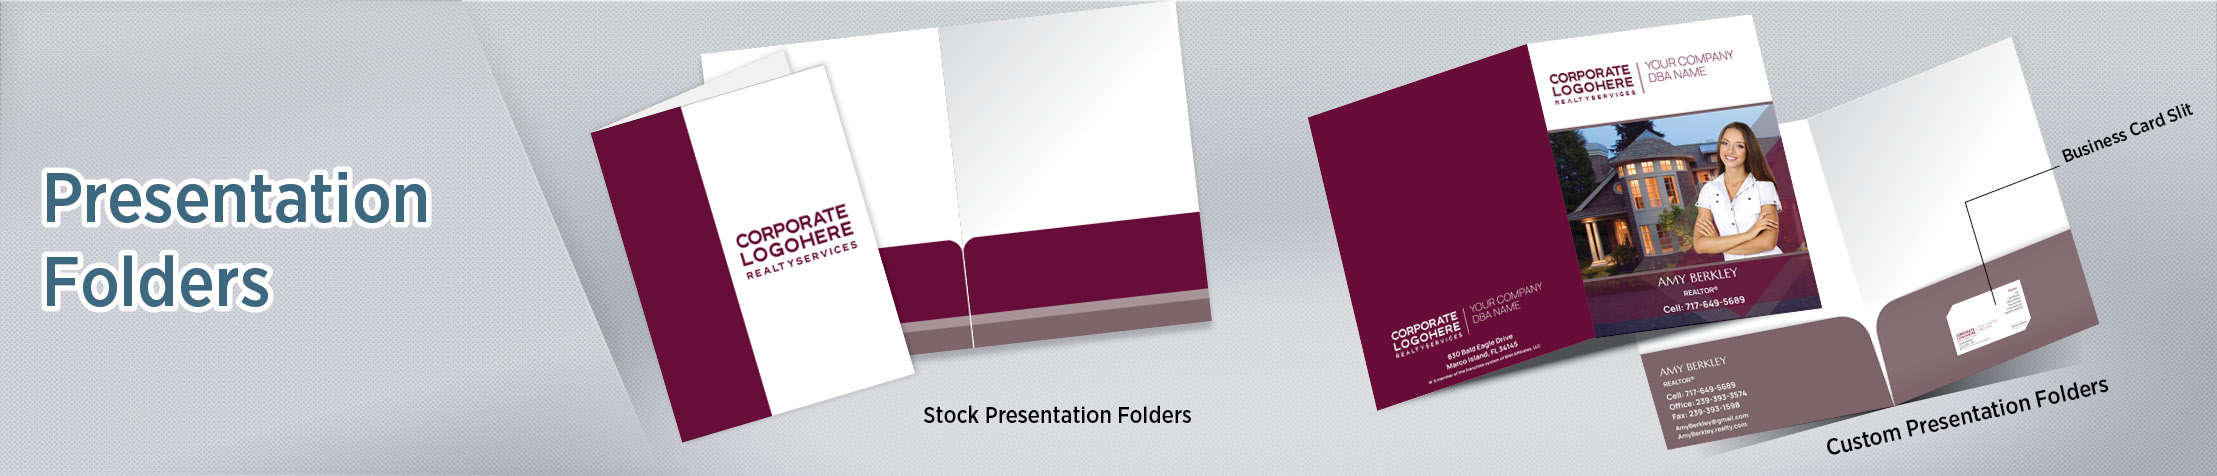 Berkshire Hathaway Real Estate Presentation Folders - folders | BestPrintBuy.com